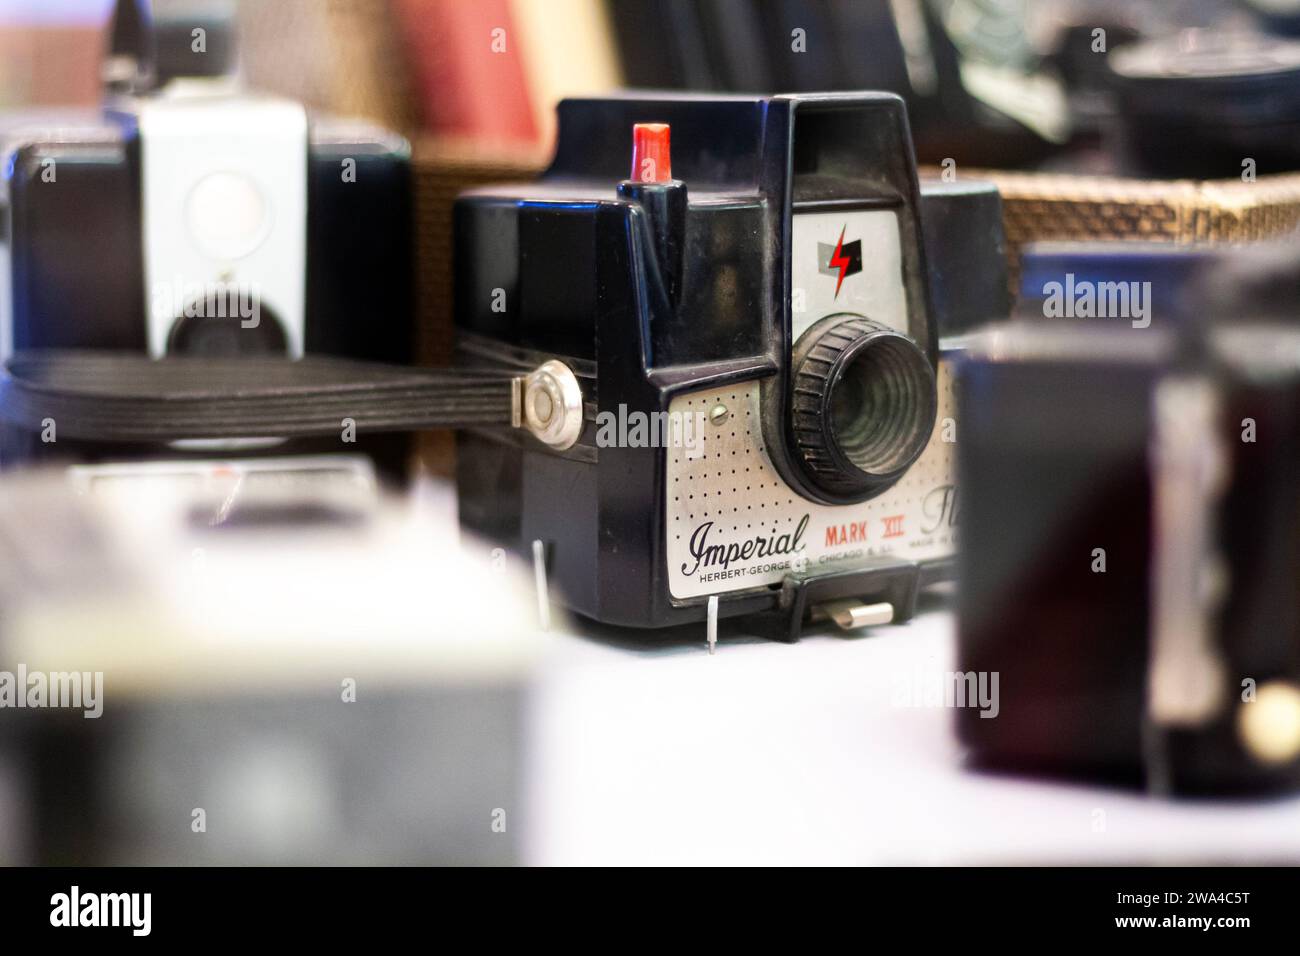 Imperial Mark XII Blitzkamera der Herbert George Company, Vintage Retro-Kamera mit anderen antiken Filmkameras Stockfoto